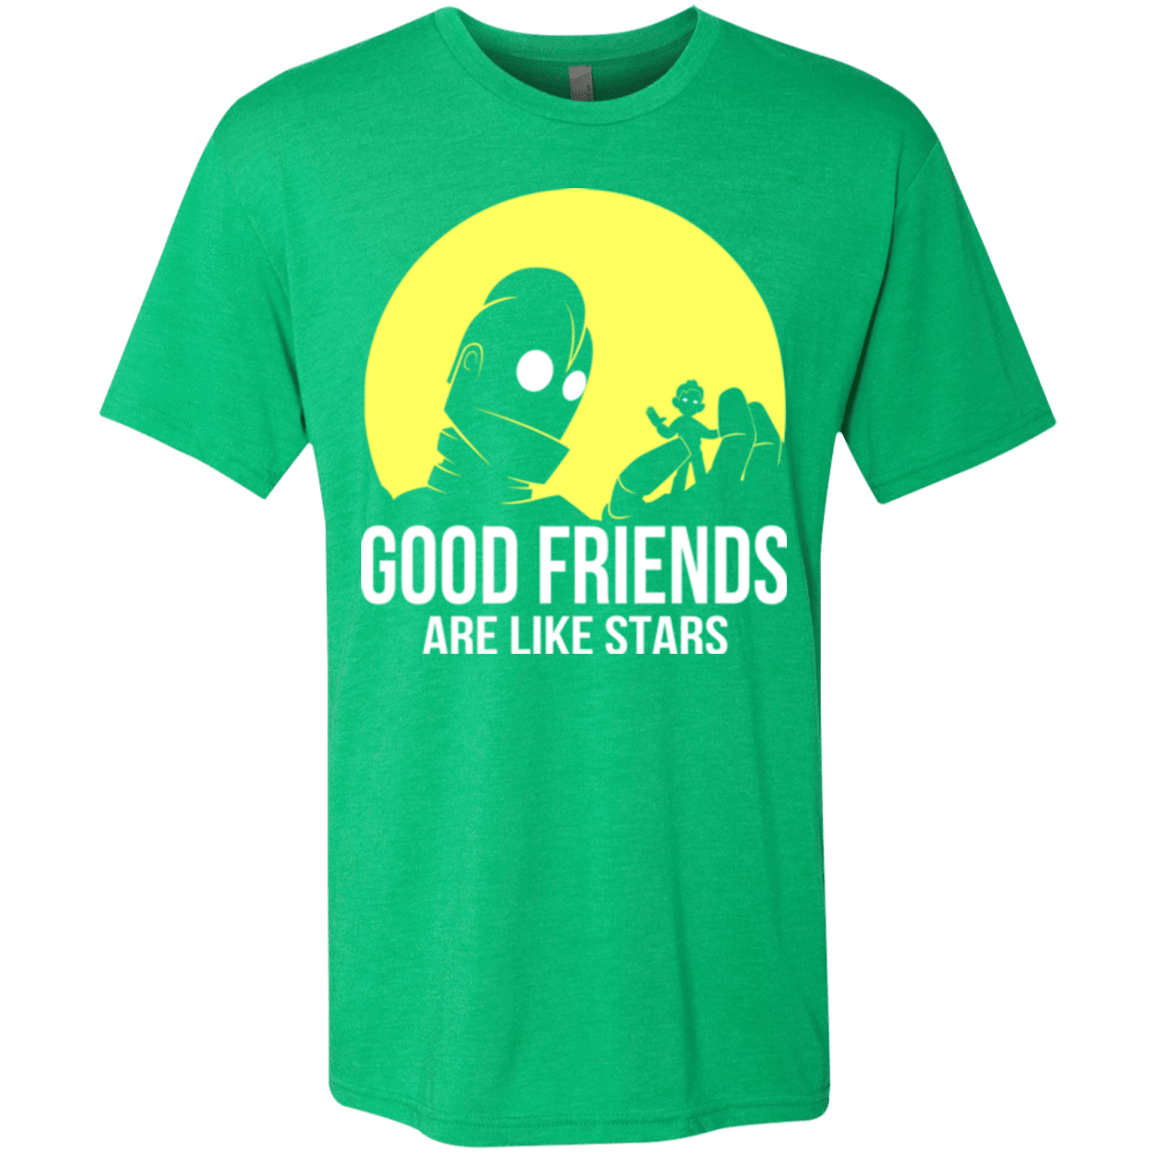 T-Shirts Envy / Small Good friends Men's Triblend T-Shirt